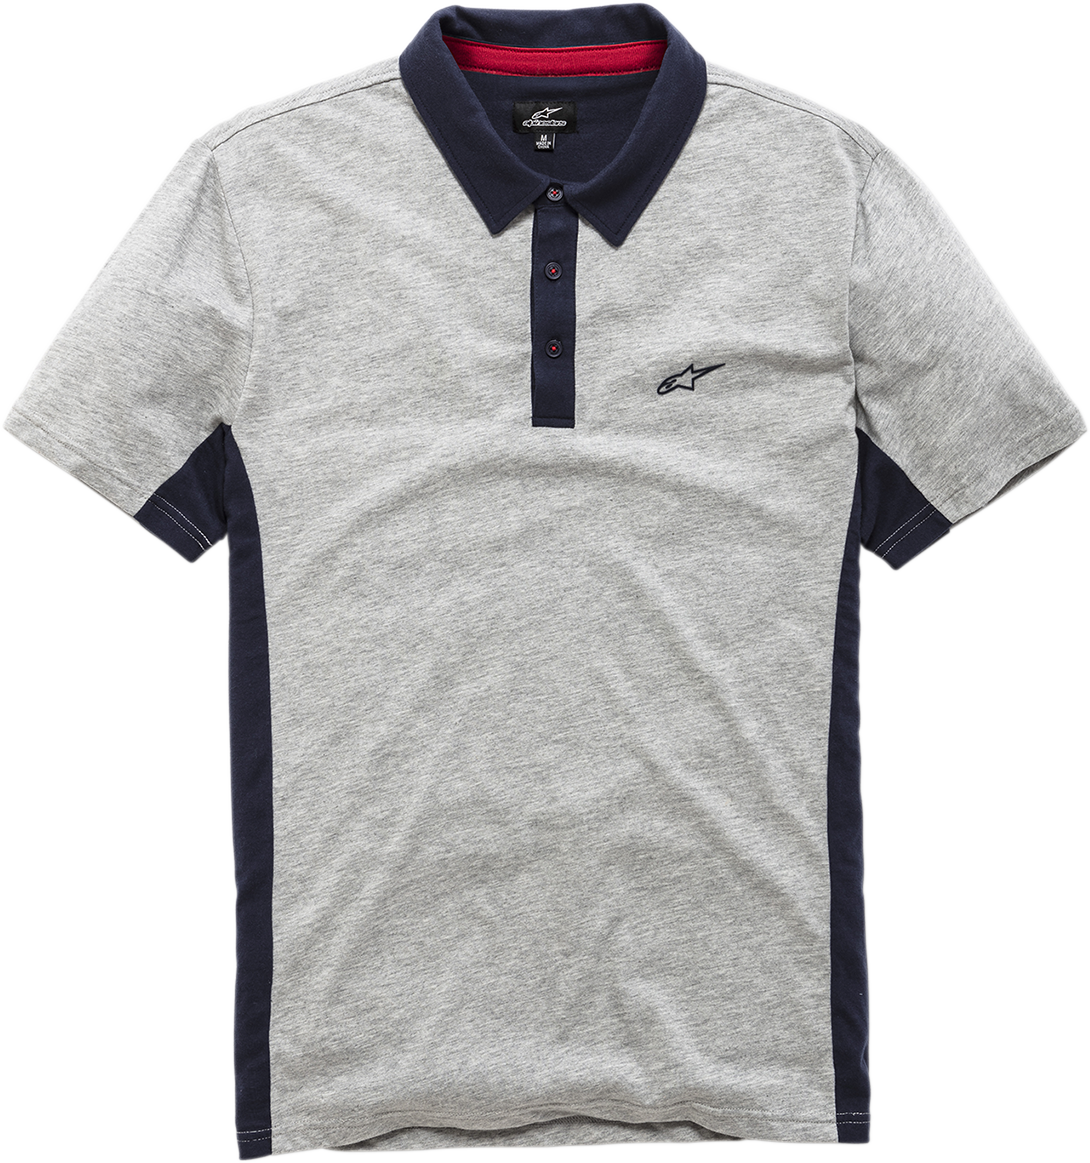 ALPINESTARS Champion Polo Shirt - Gray/Navy - XL 1210415001171XL